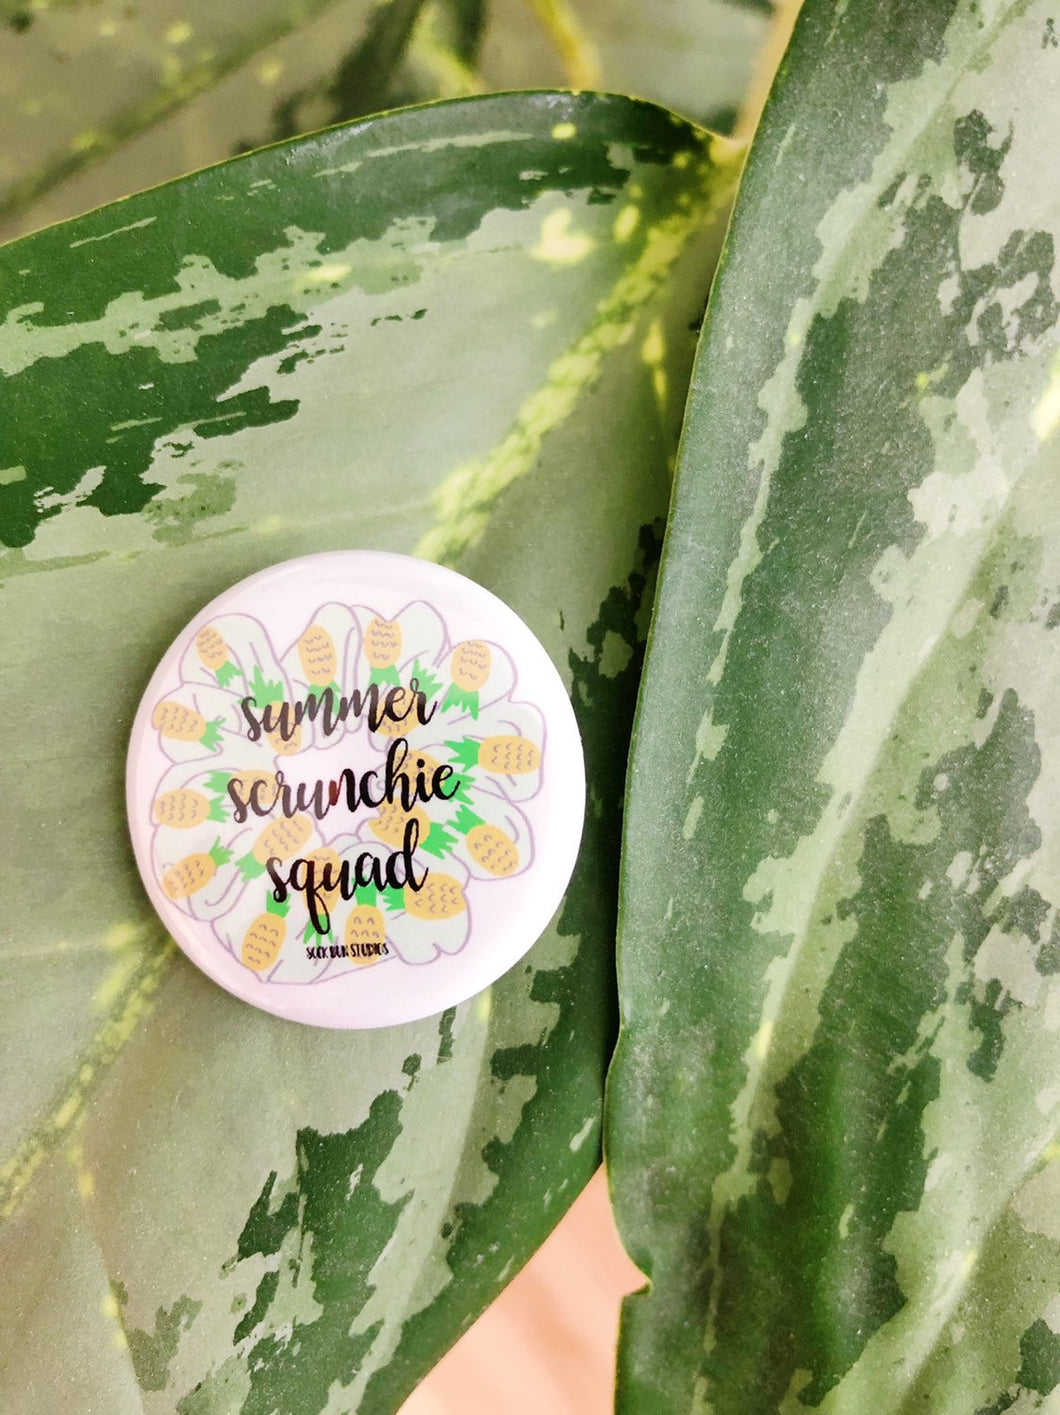 Limited Edition Sock Bun Studios 2019 Summer Scrunchie Squad Official Button